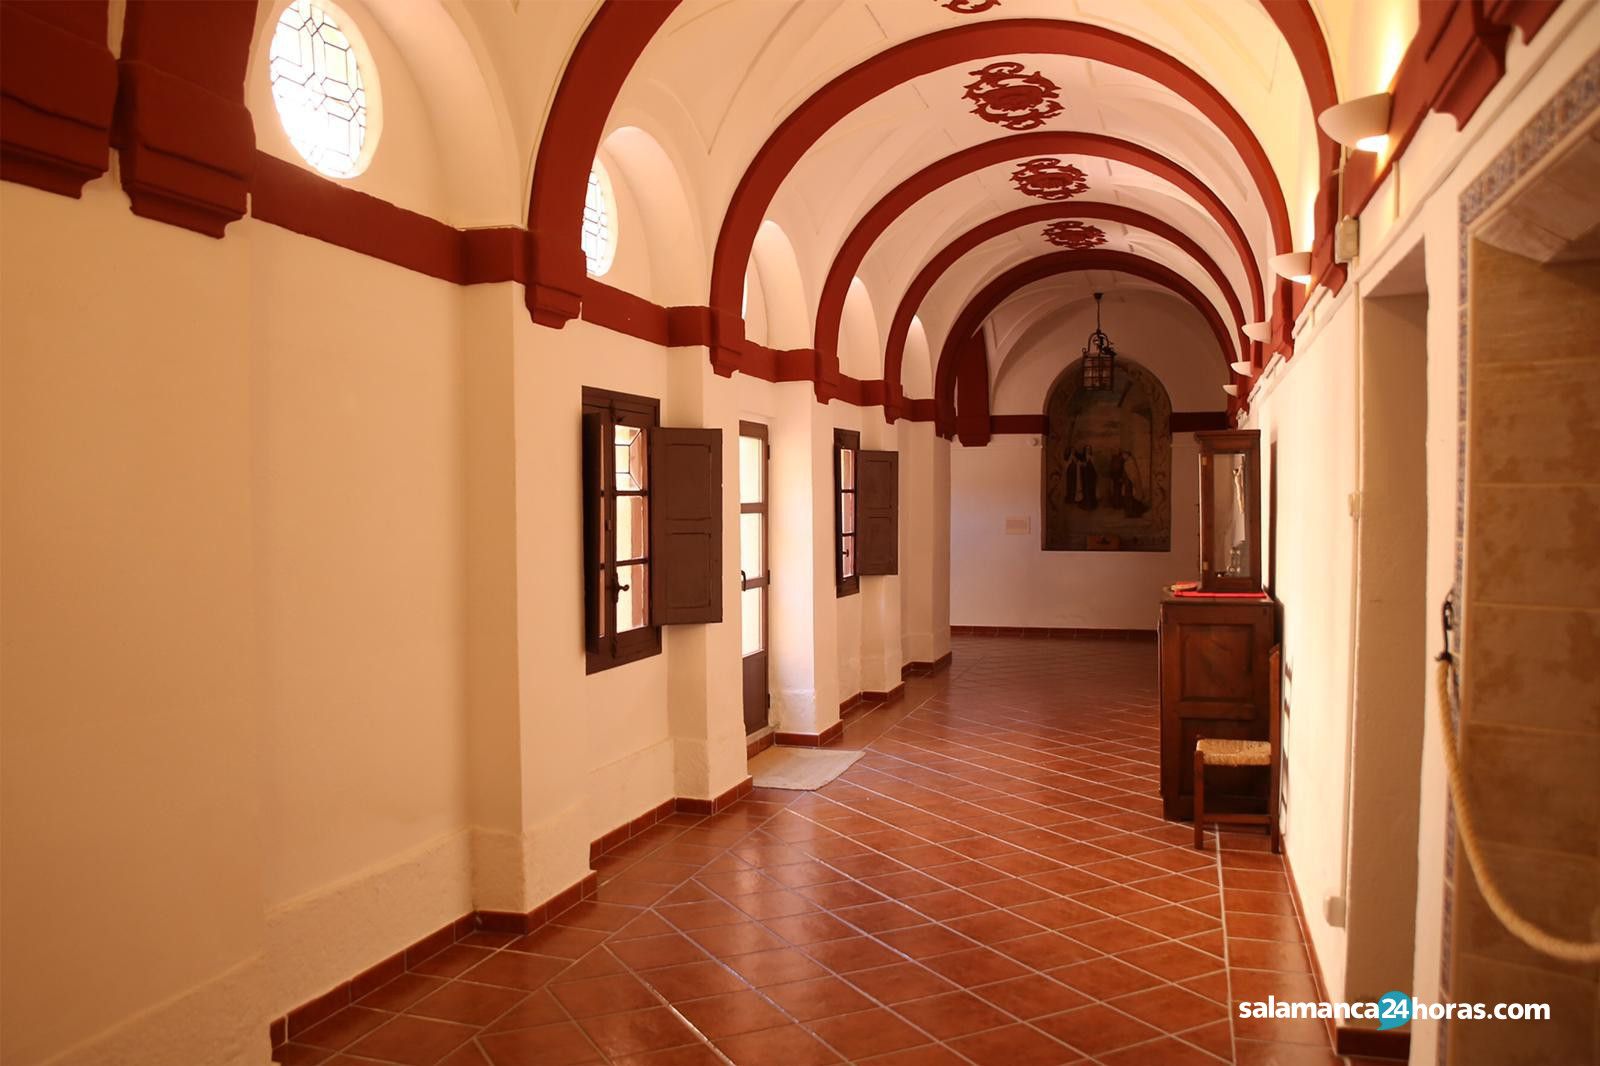  Convento carmelita de Alba de Tormes  (1) 